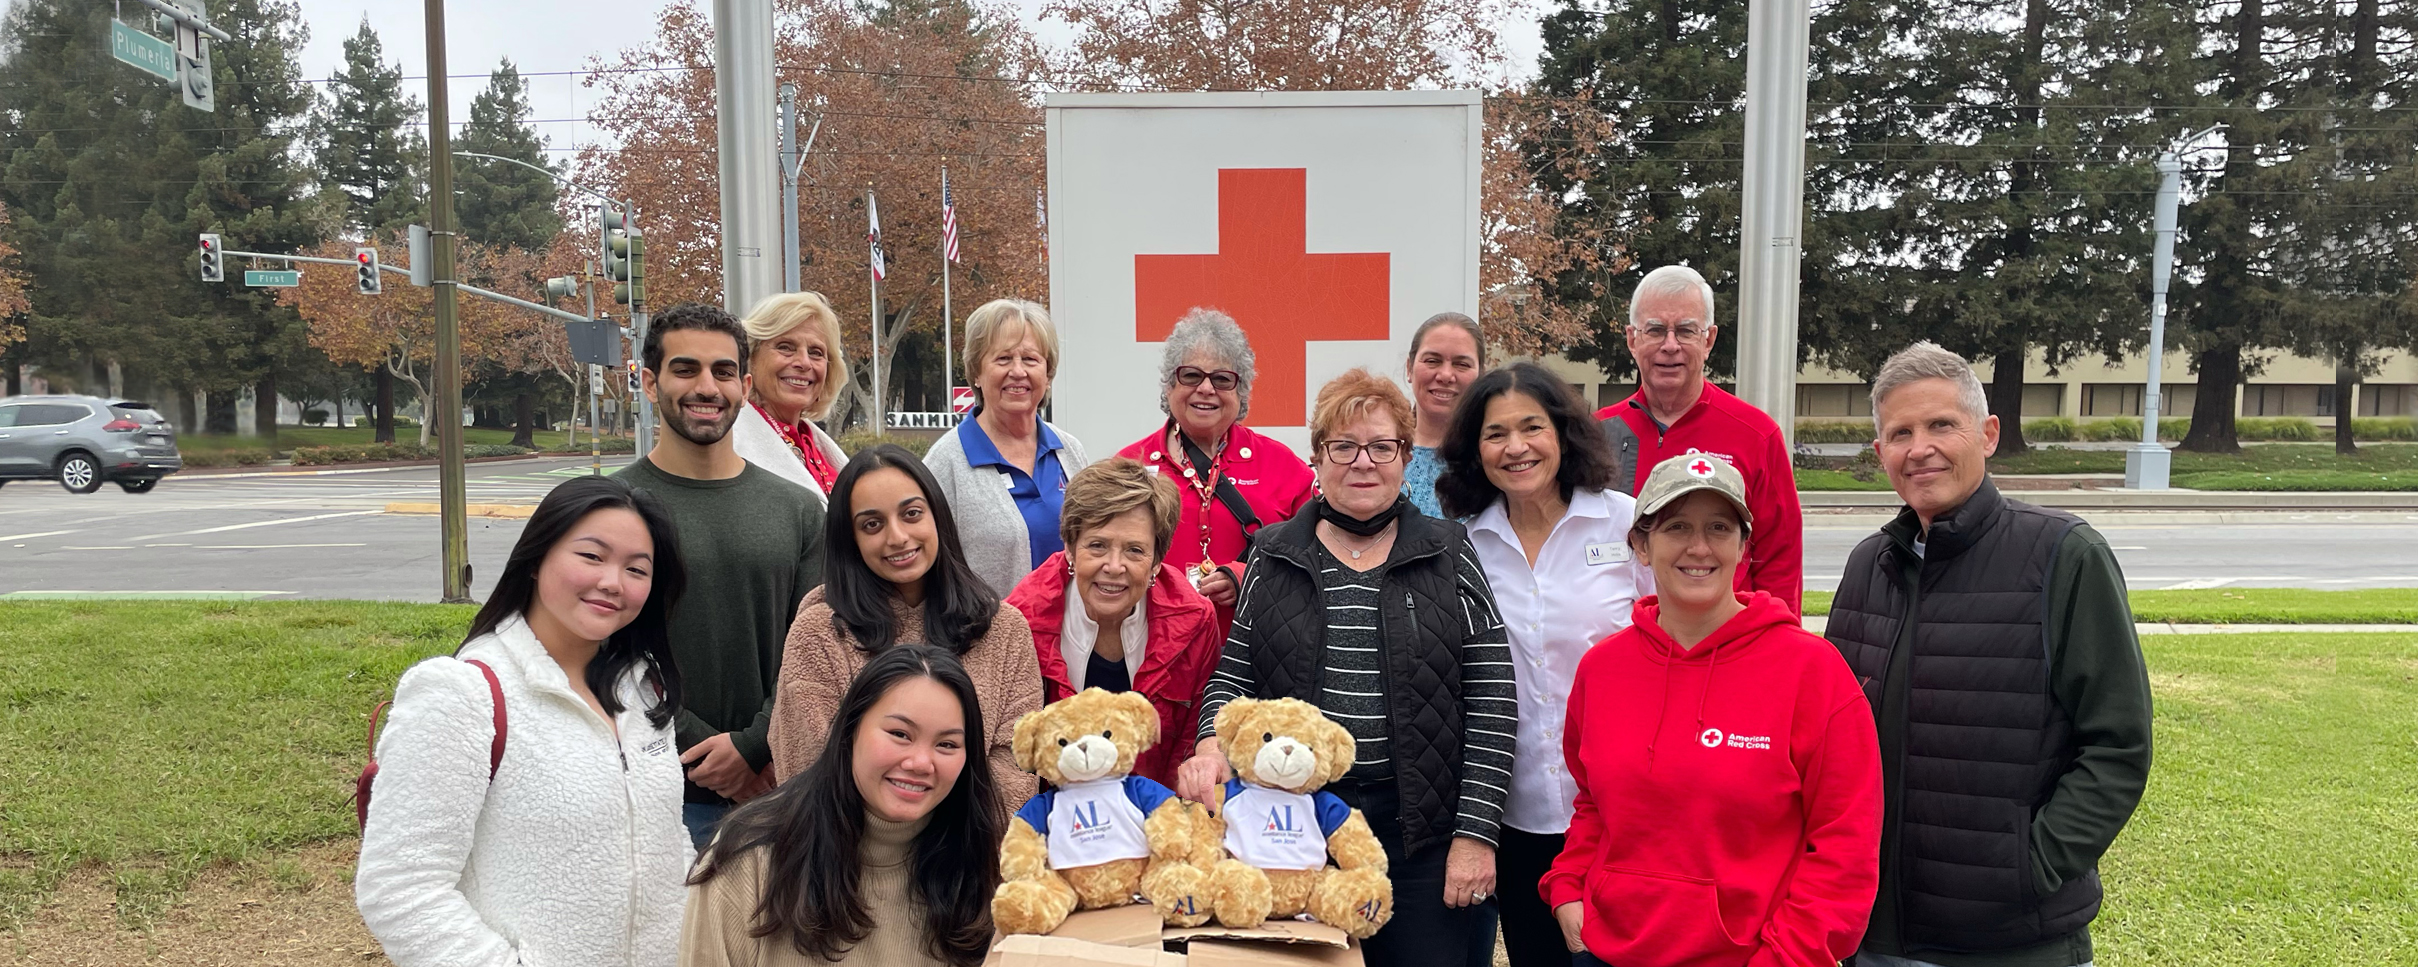 Hug-a-Bear and Red Cross Partnership